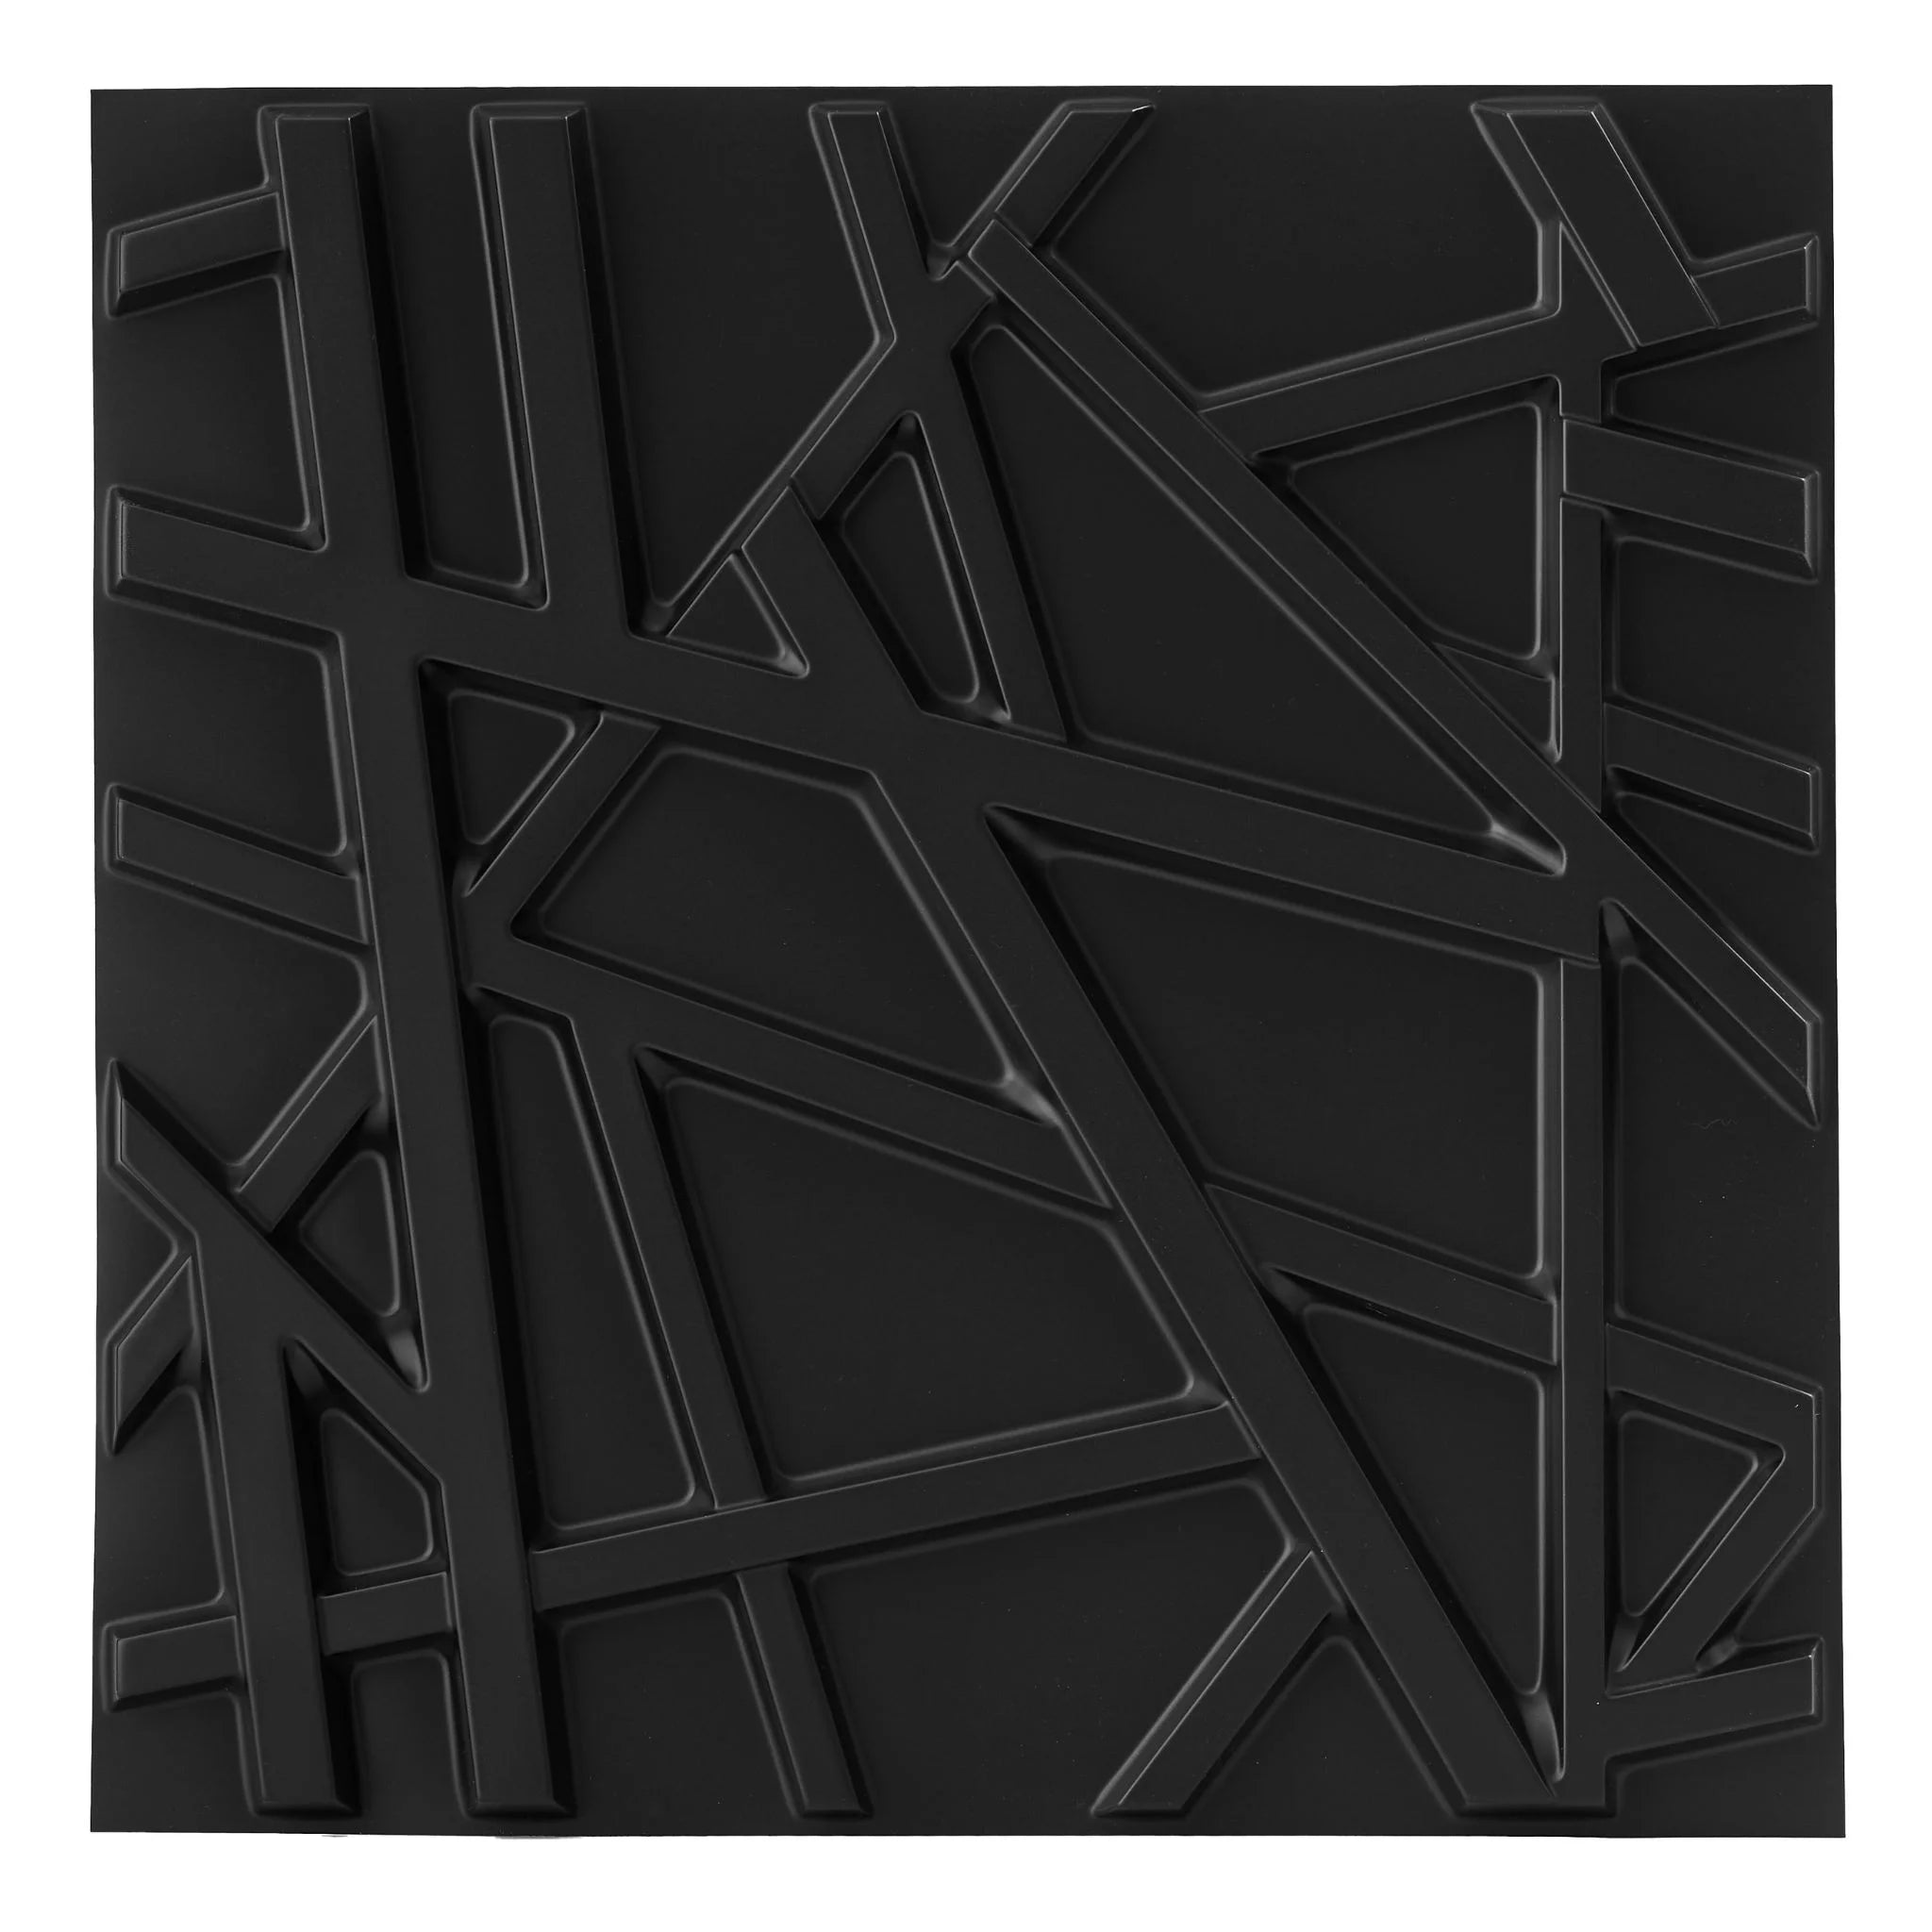 Detail view of black PVC wall panel showcasing crisscross design